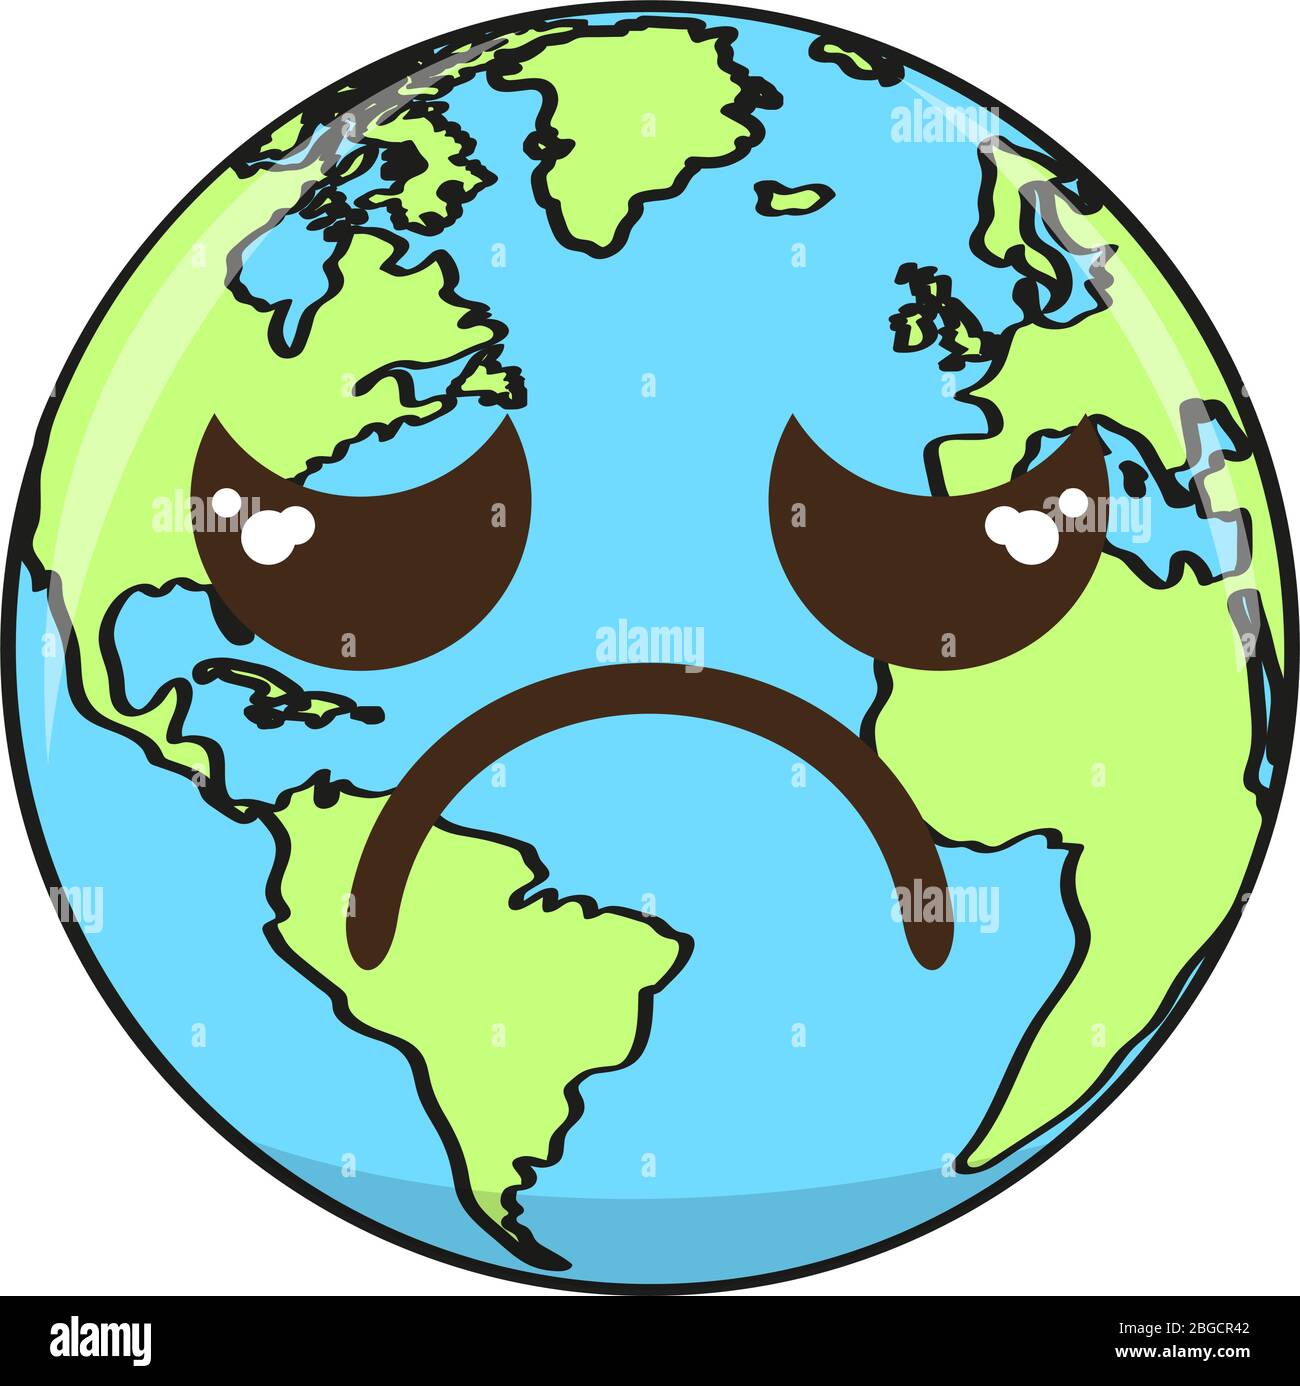 Dibujos animados de un planeta tierra triste Imagen Vector de stock - Alamy